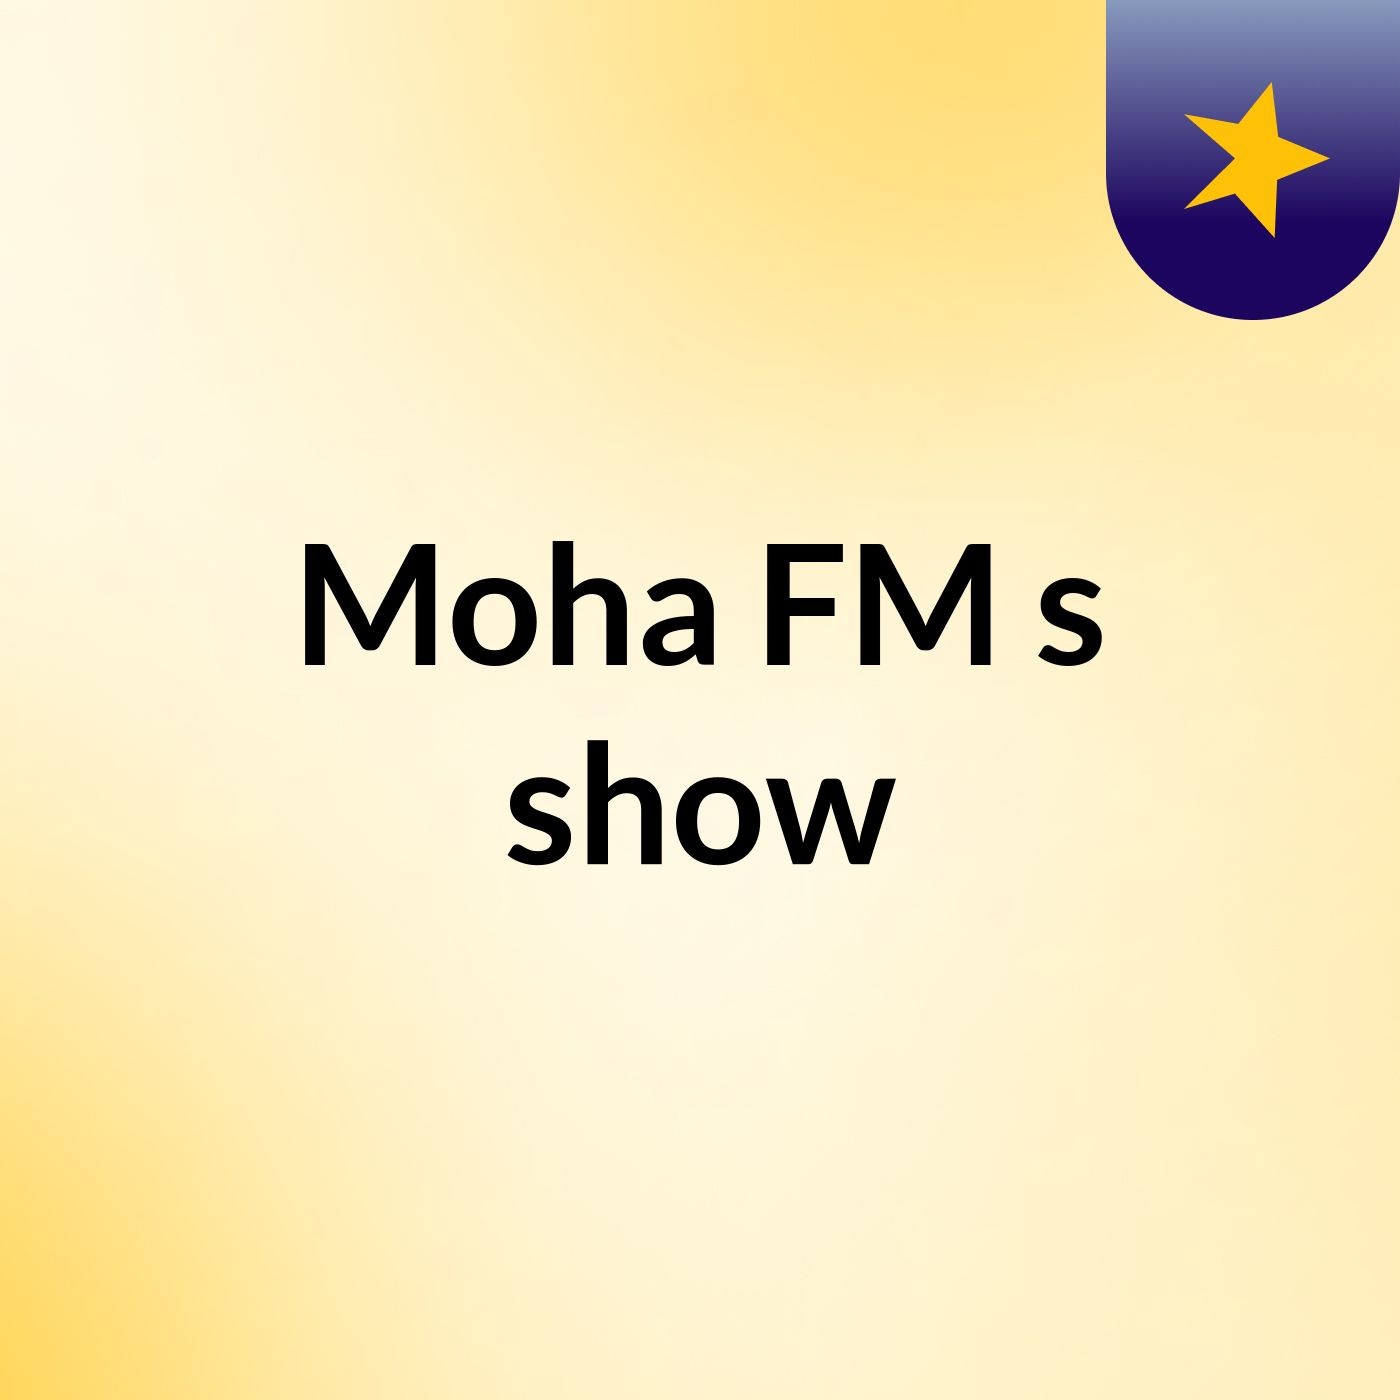 Moha FM's show